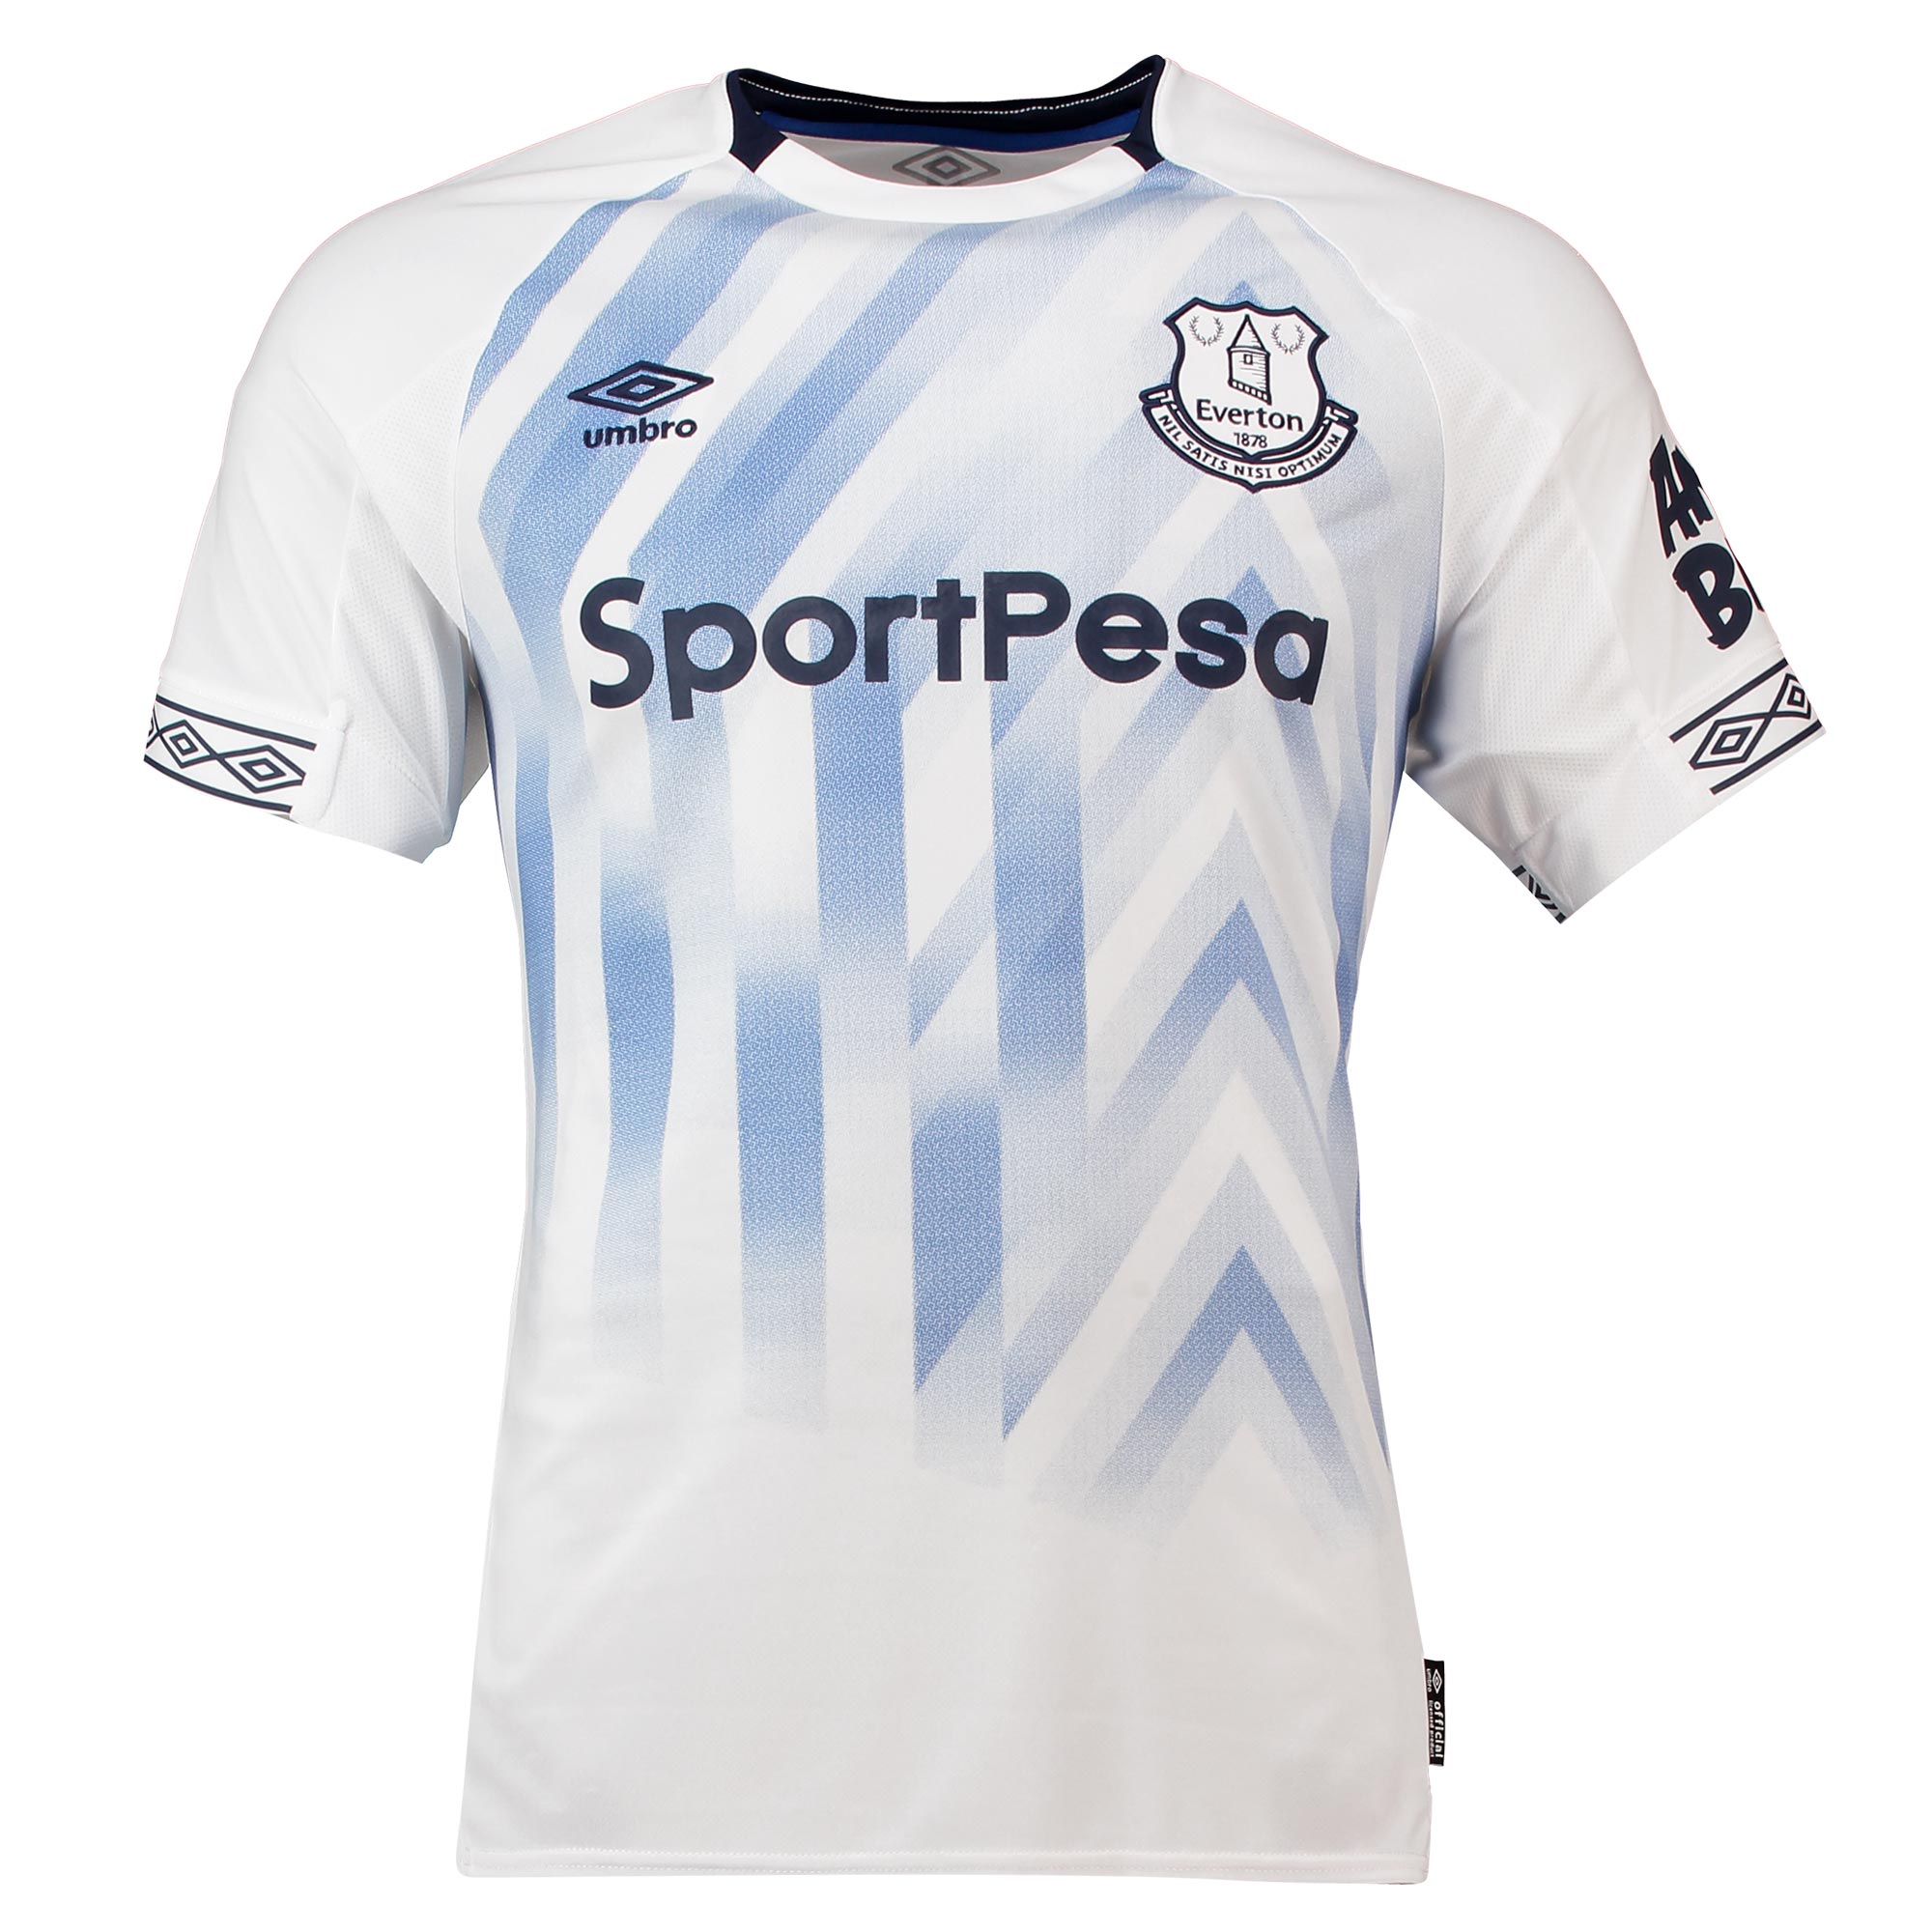 Grey Everton FC Umbro Men's 2018-19 LS Away Football Shirt New 